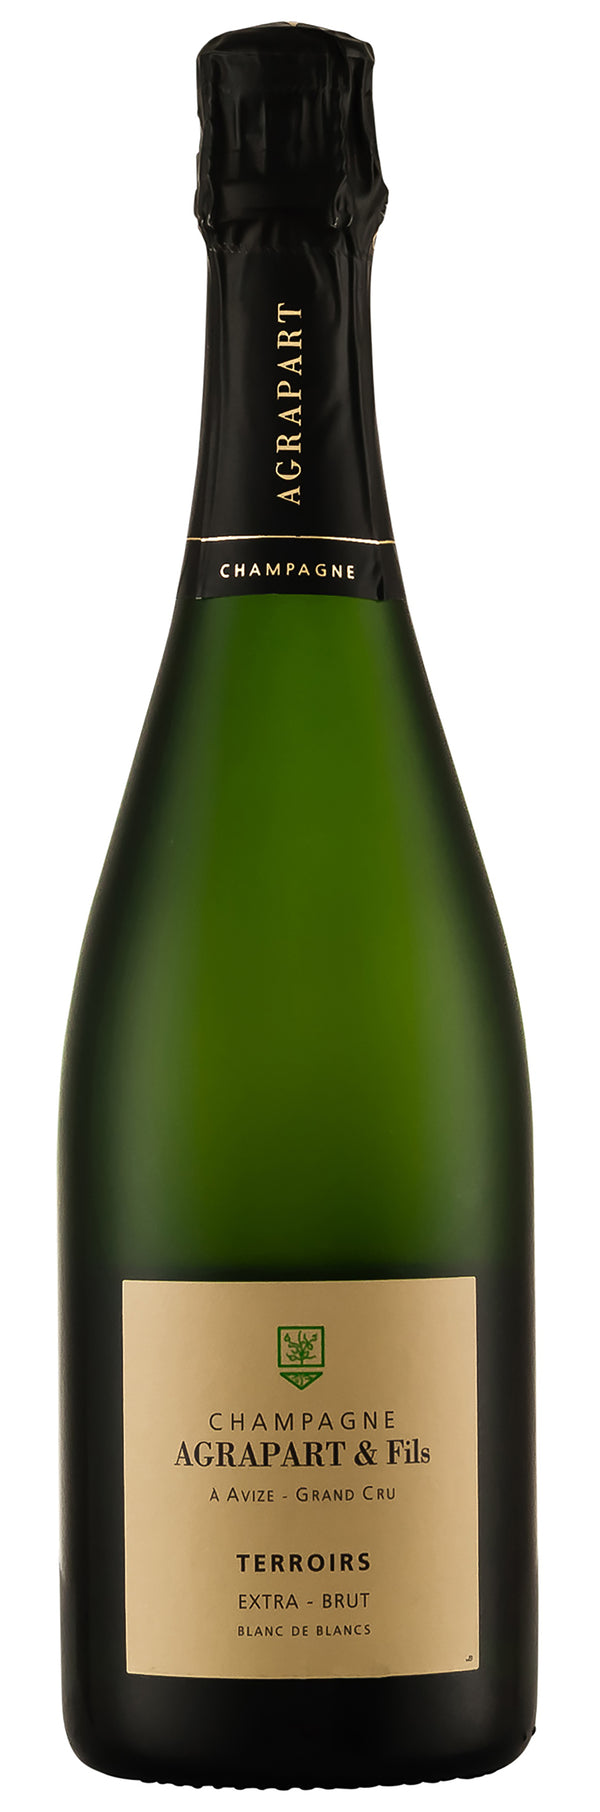 Champagne Agrapart & Fils Grand Cru Terroirs Blanc de Blancs NV (Base 19 Disg. Jun 23)